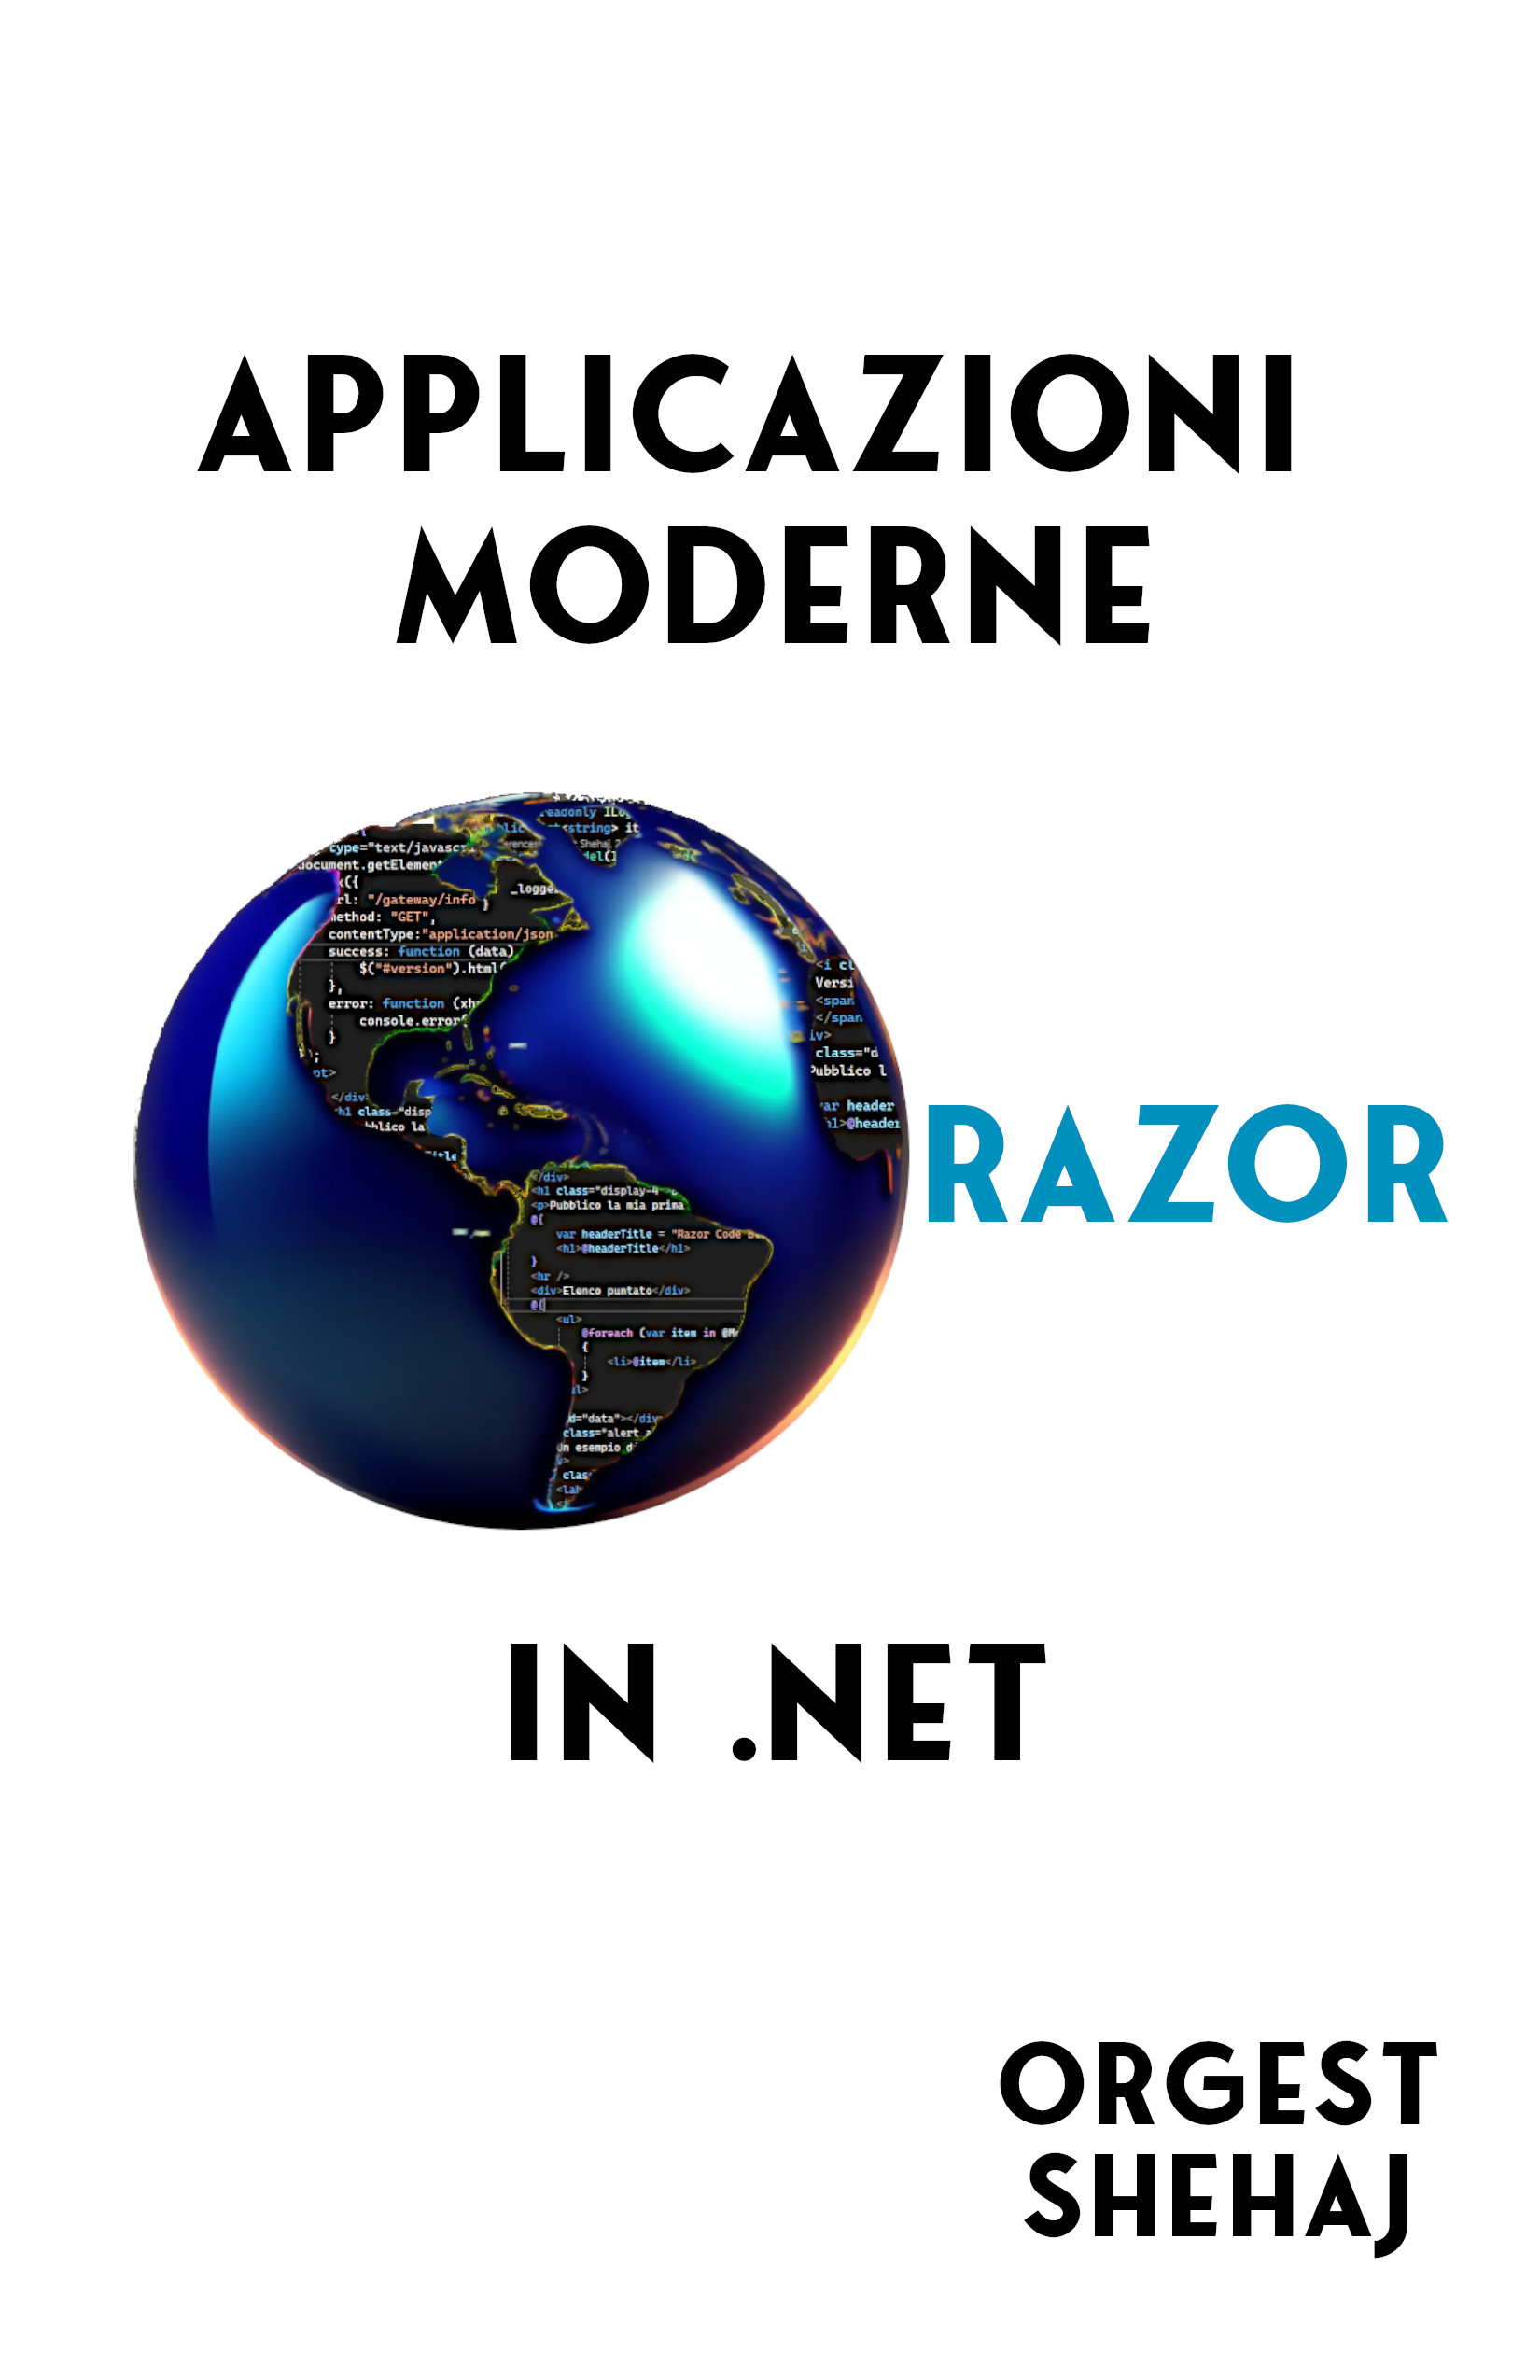 Applicazioni Moderne Razor in .NET